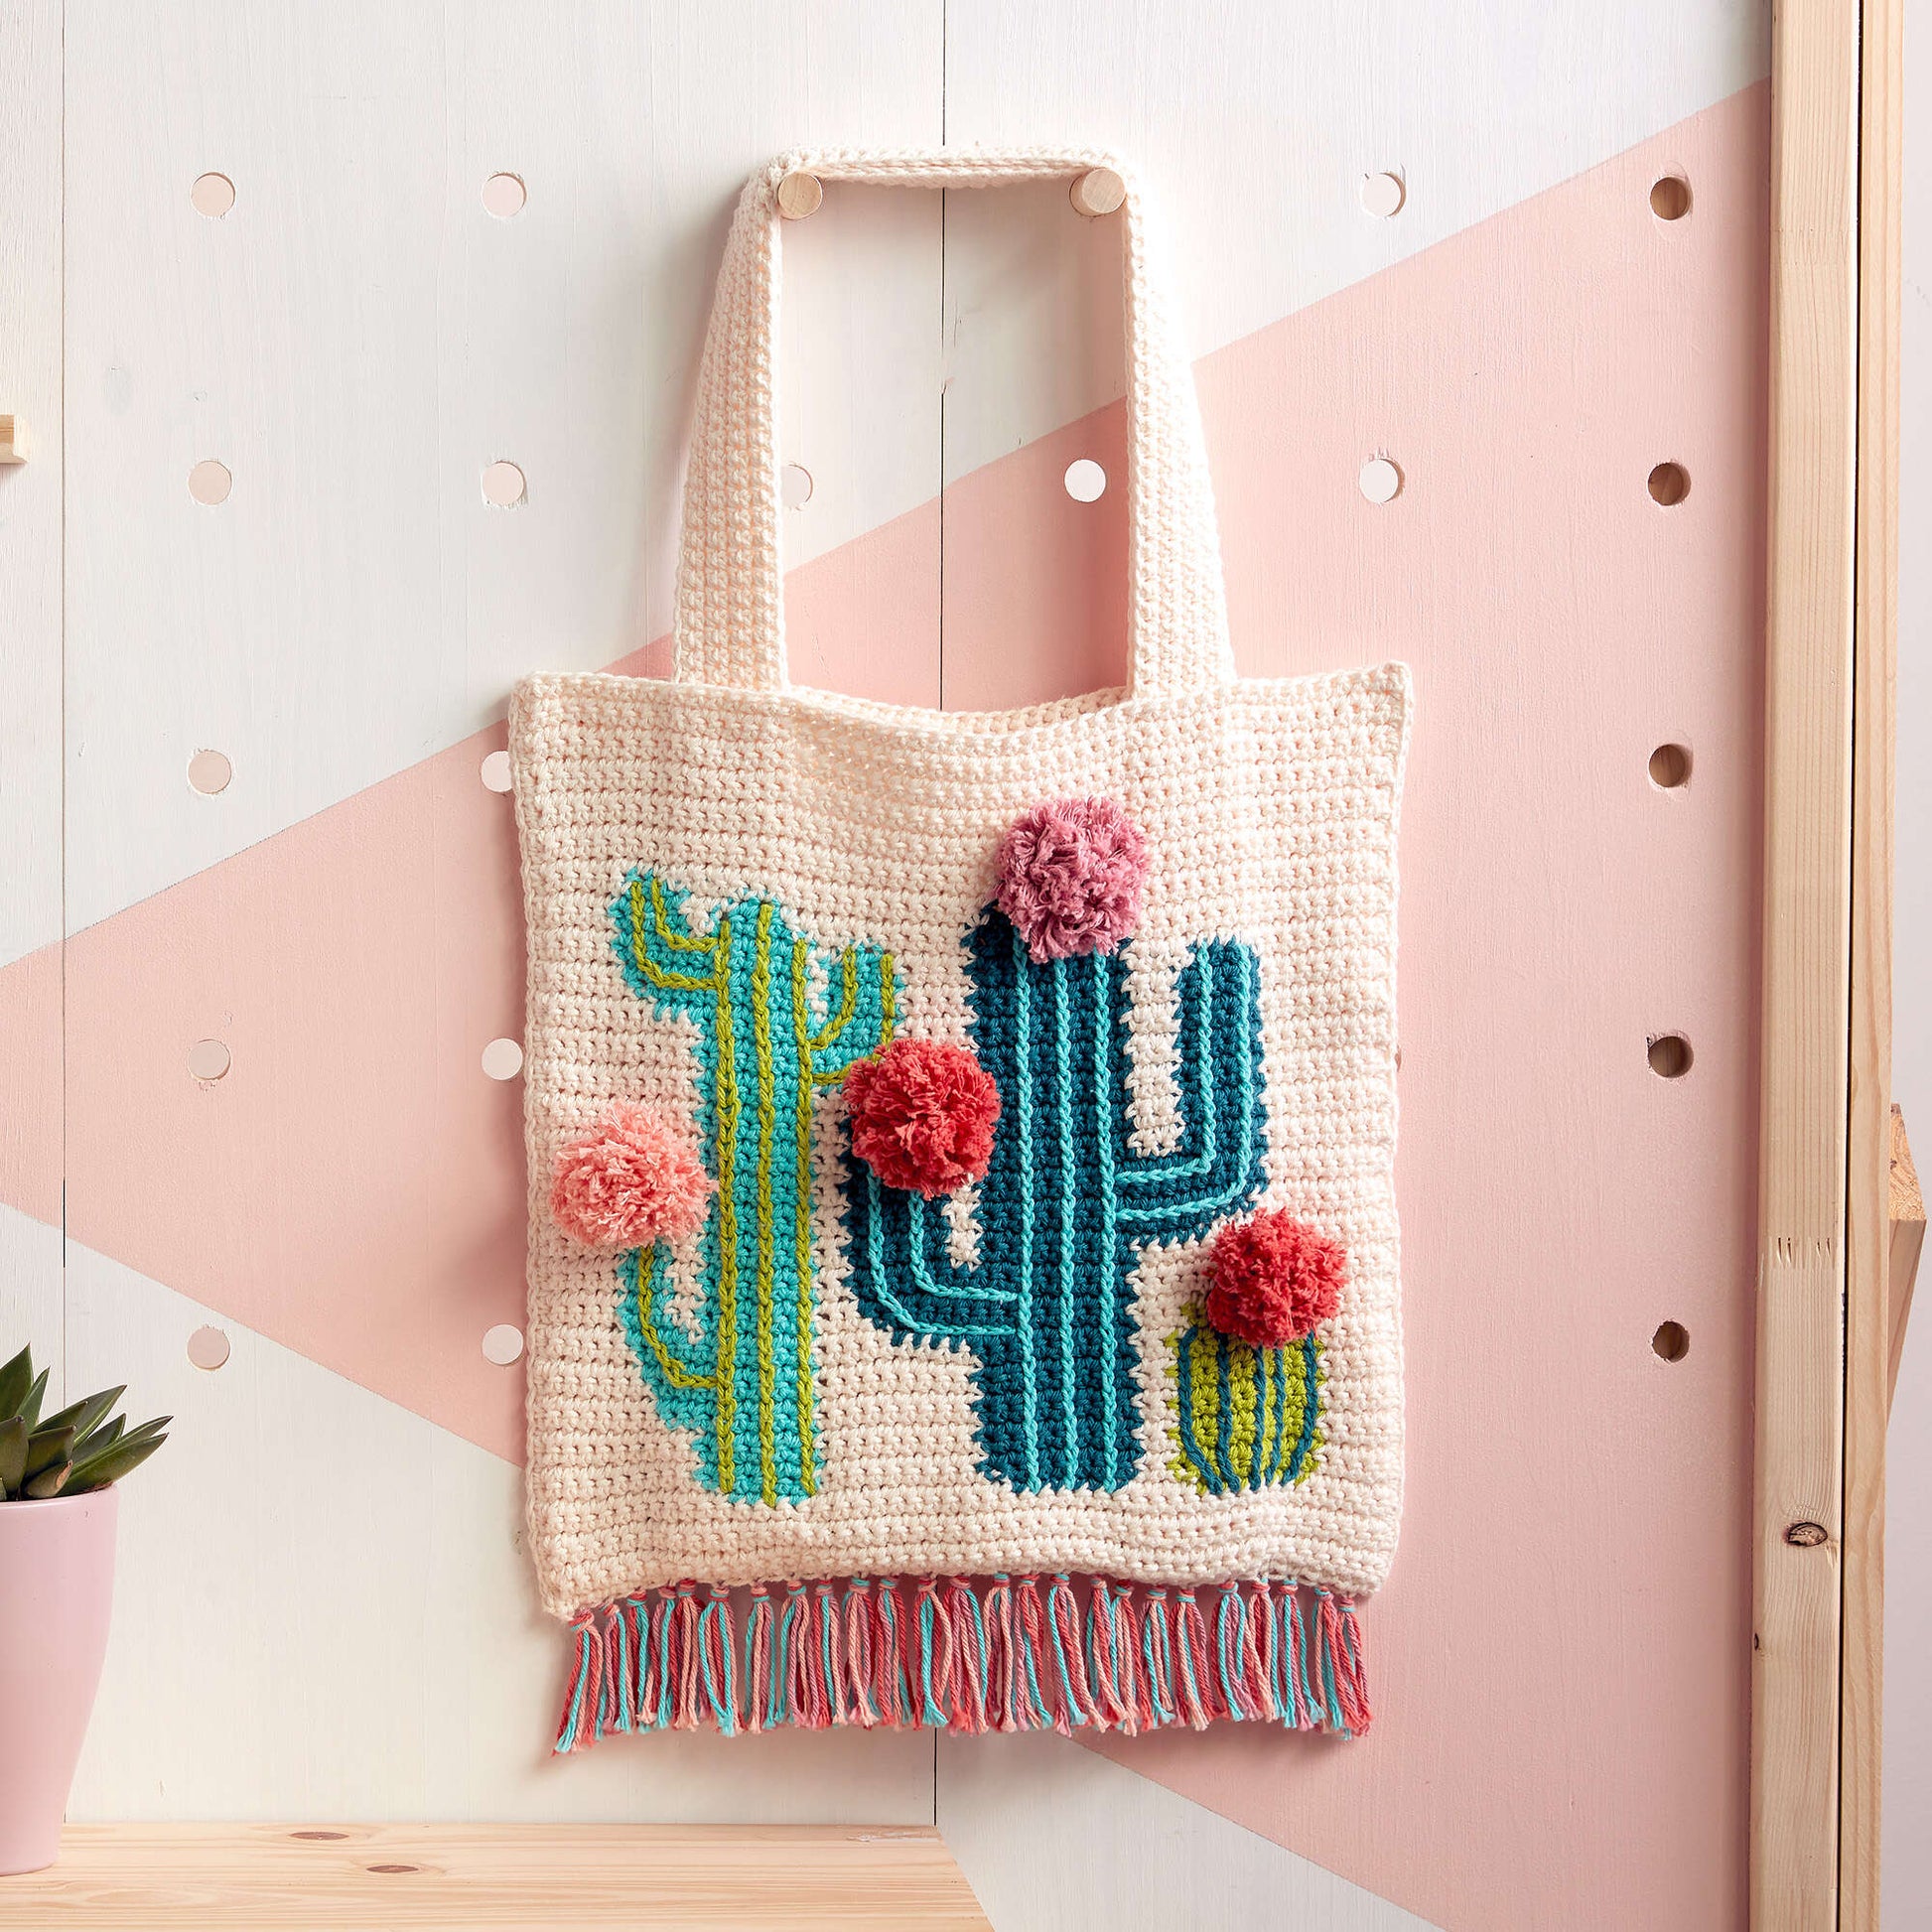 Cactus LOVE Crochet Kit – Lily's Lyric